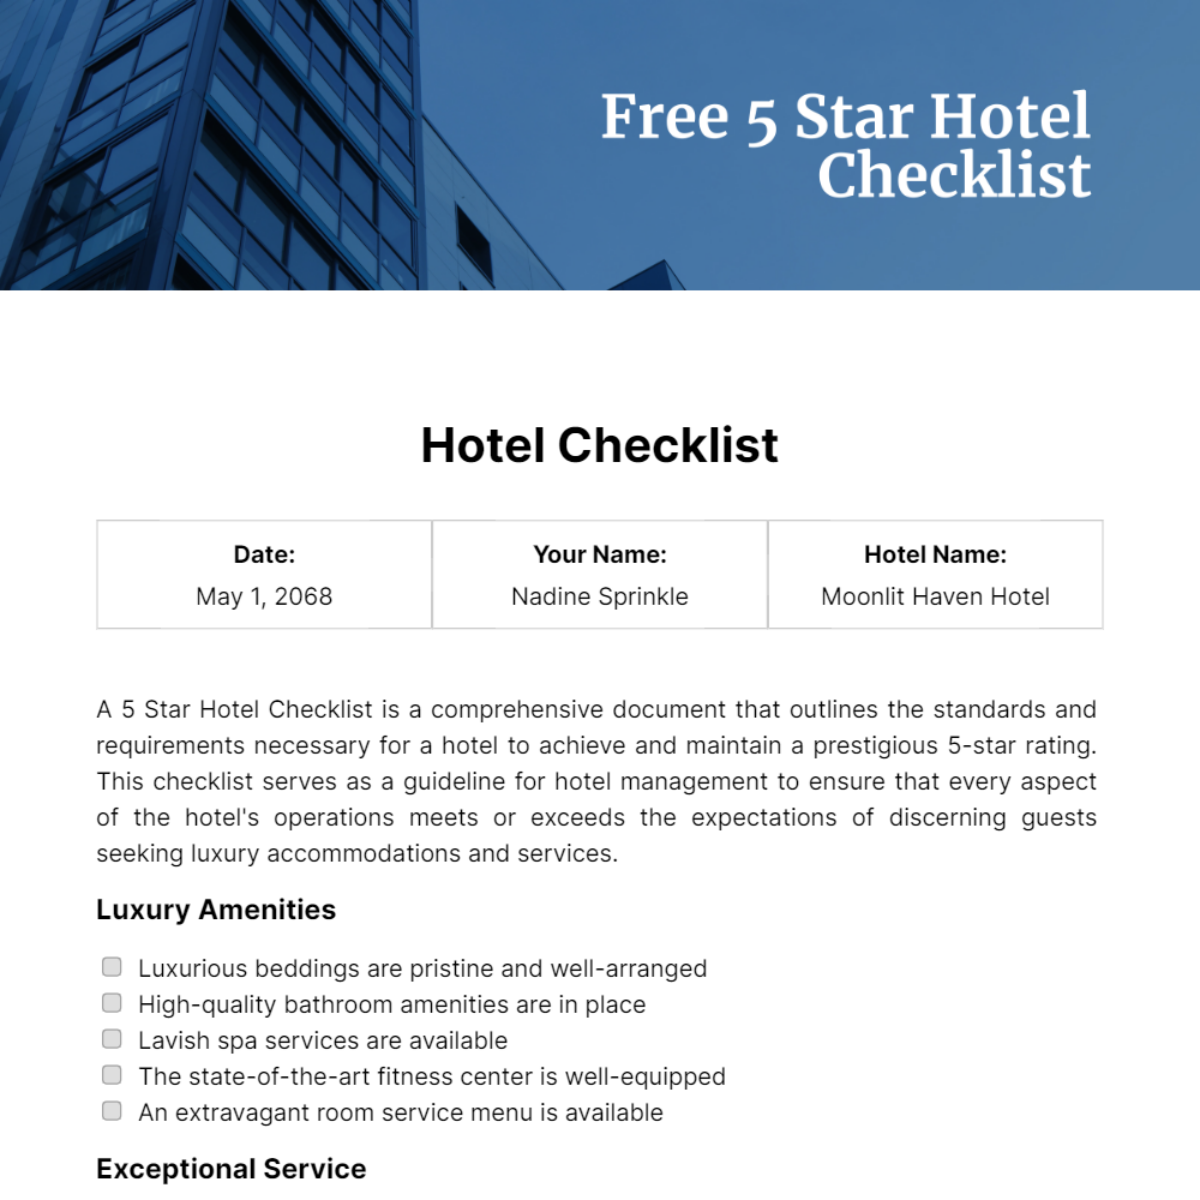 Free 5 Star Hotel Checklist Template